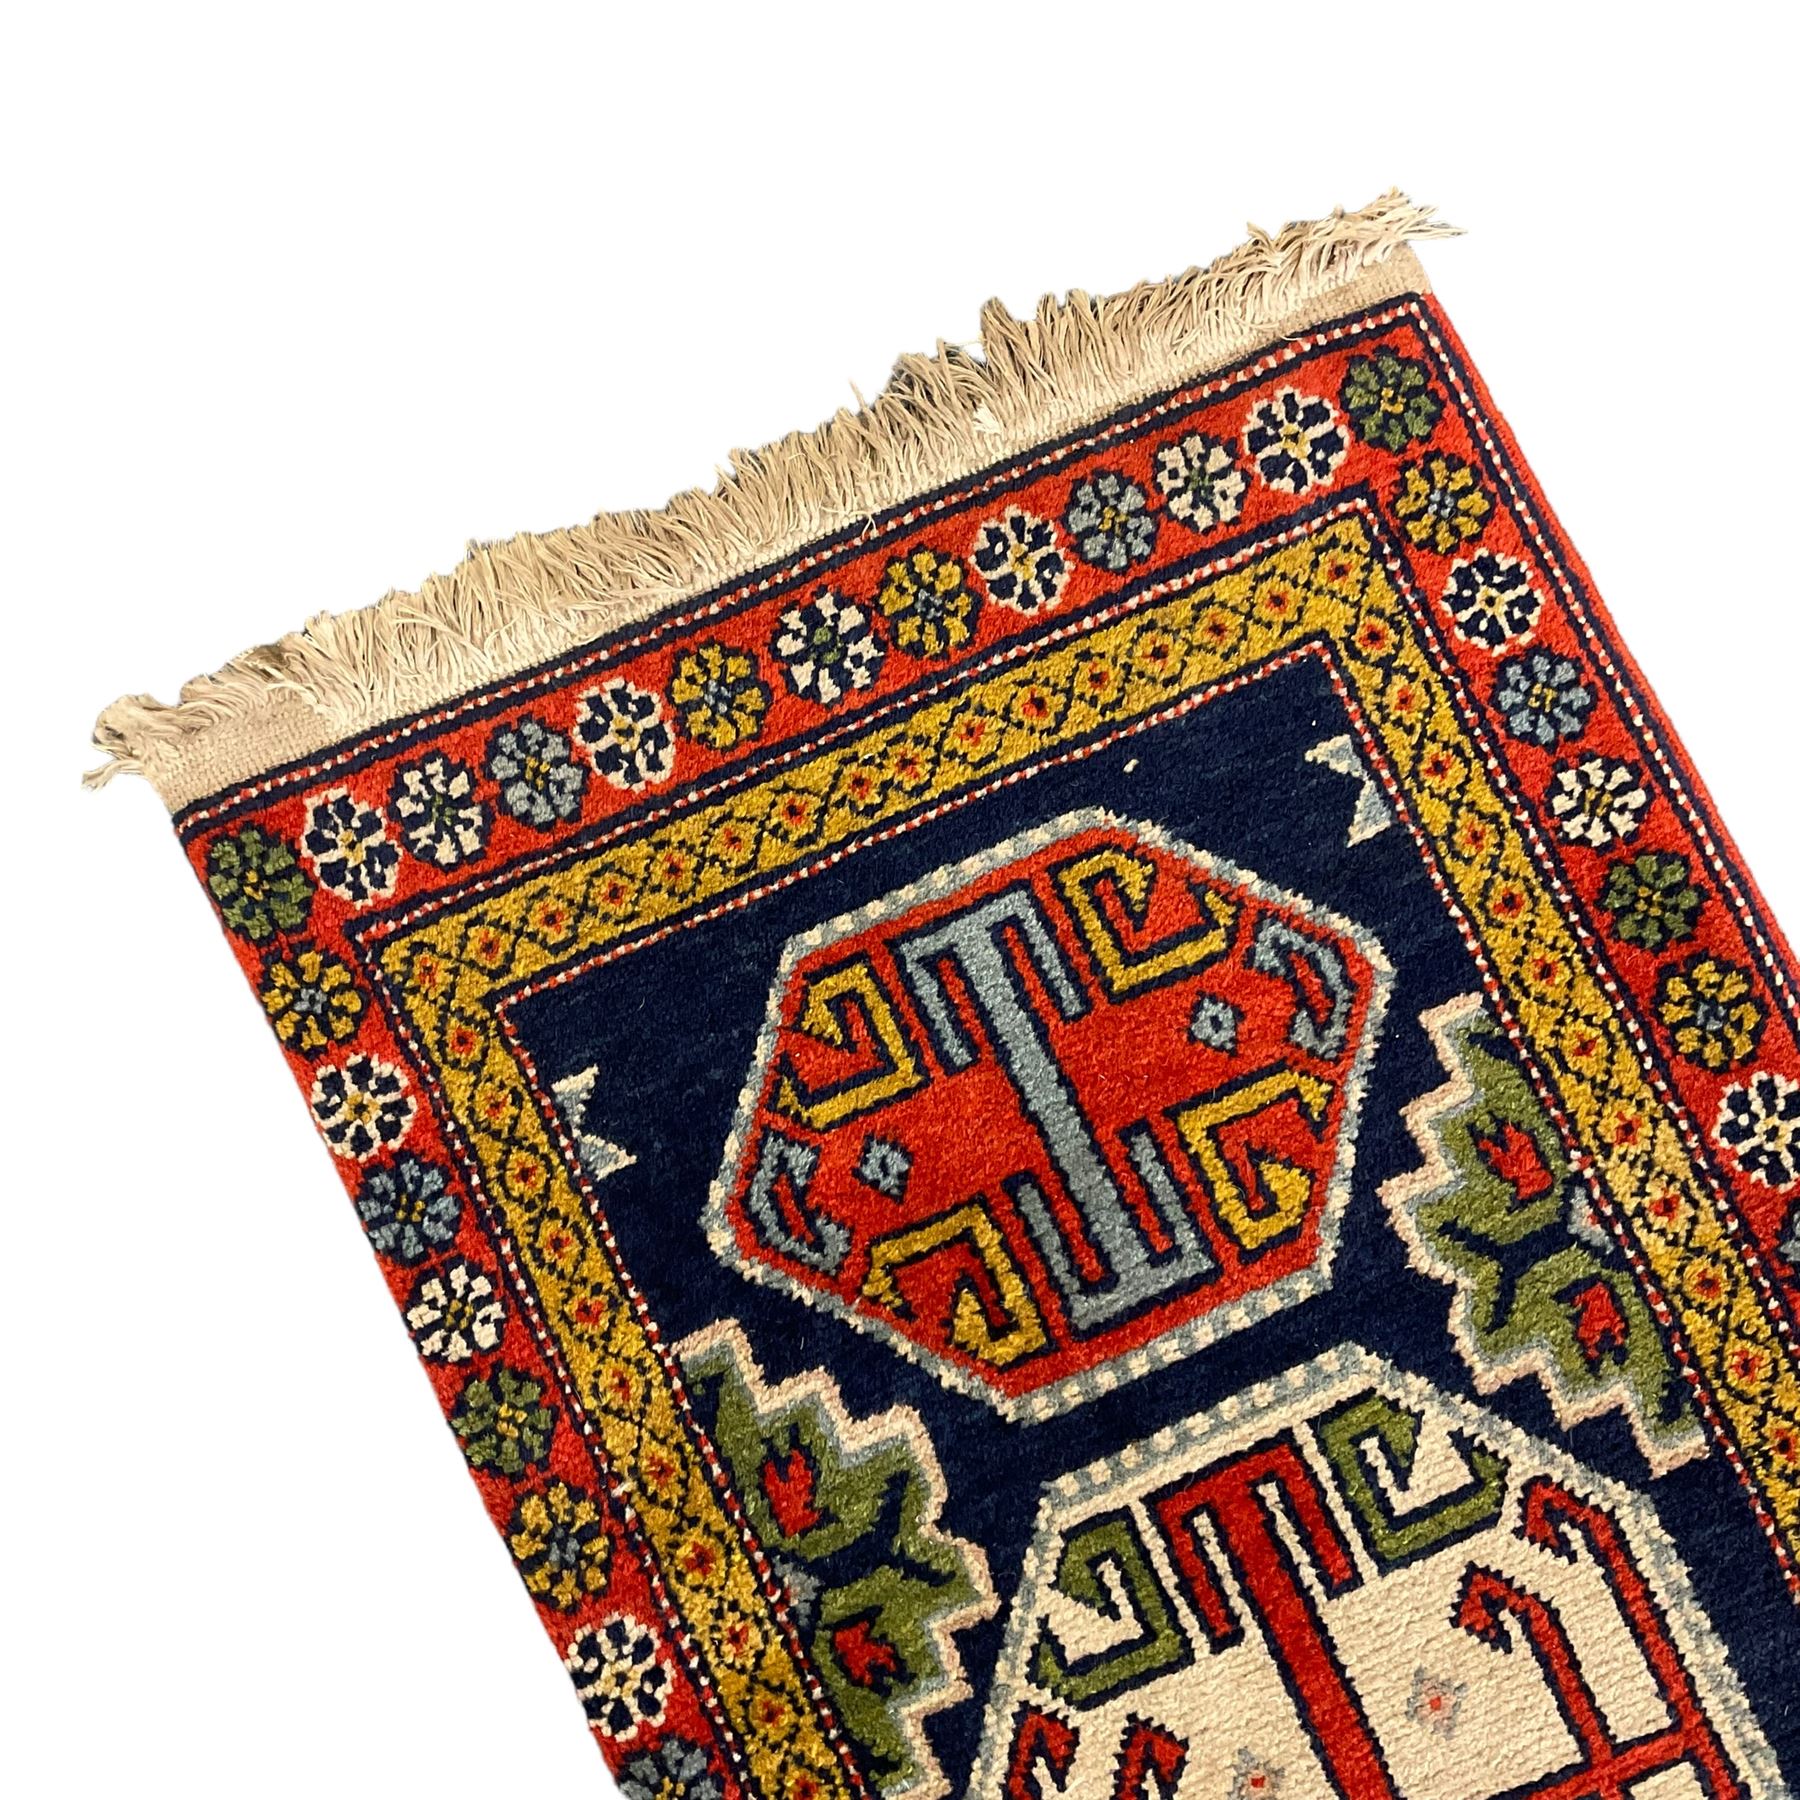 Small Persian indigo ground rug or mat - Image 3 of 5